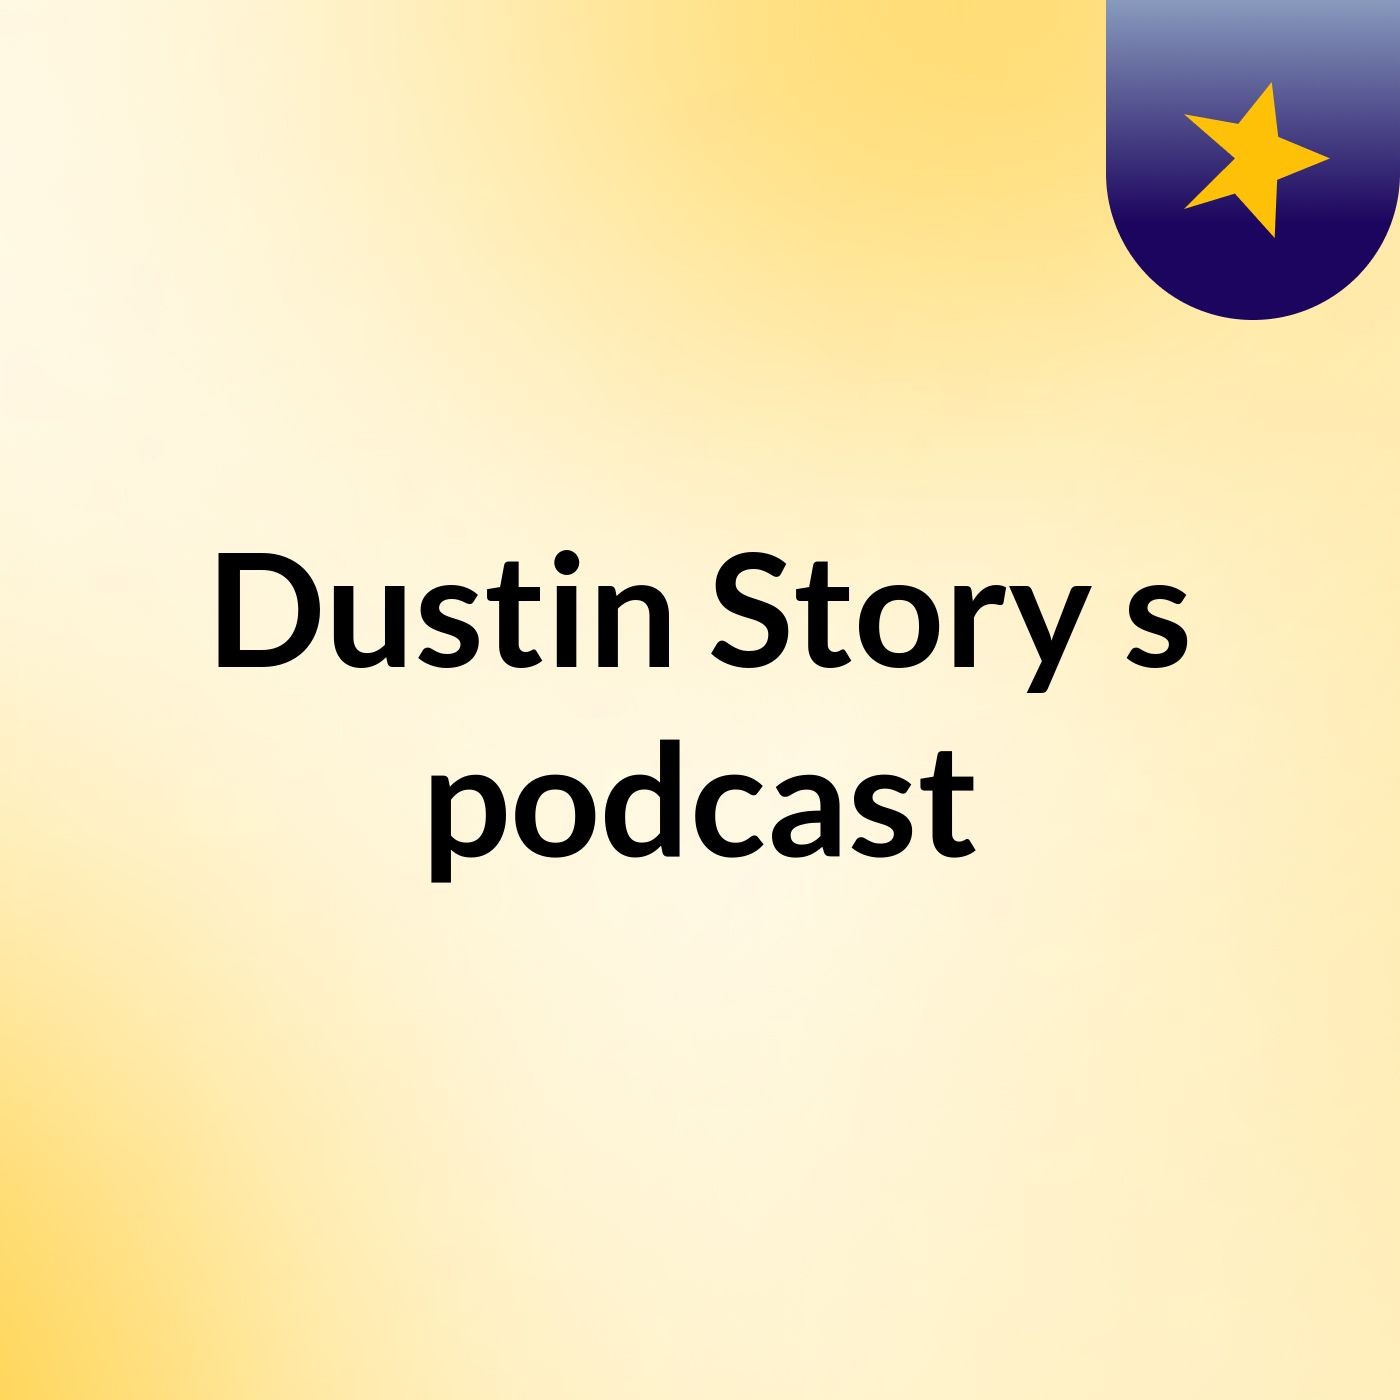 Dustin Story's podcast